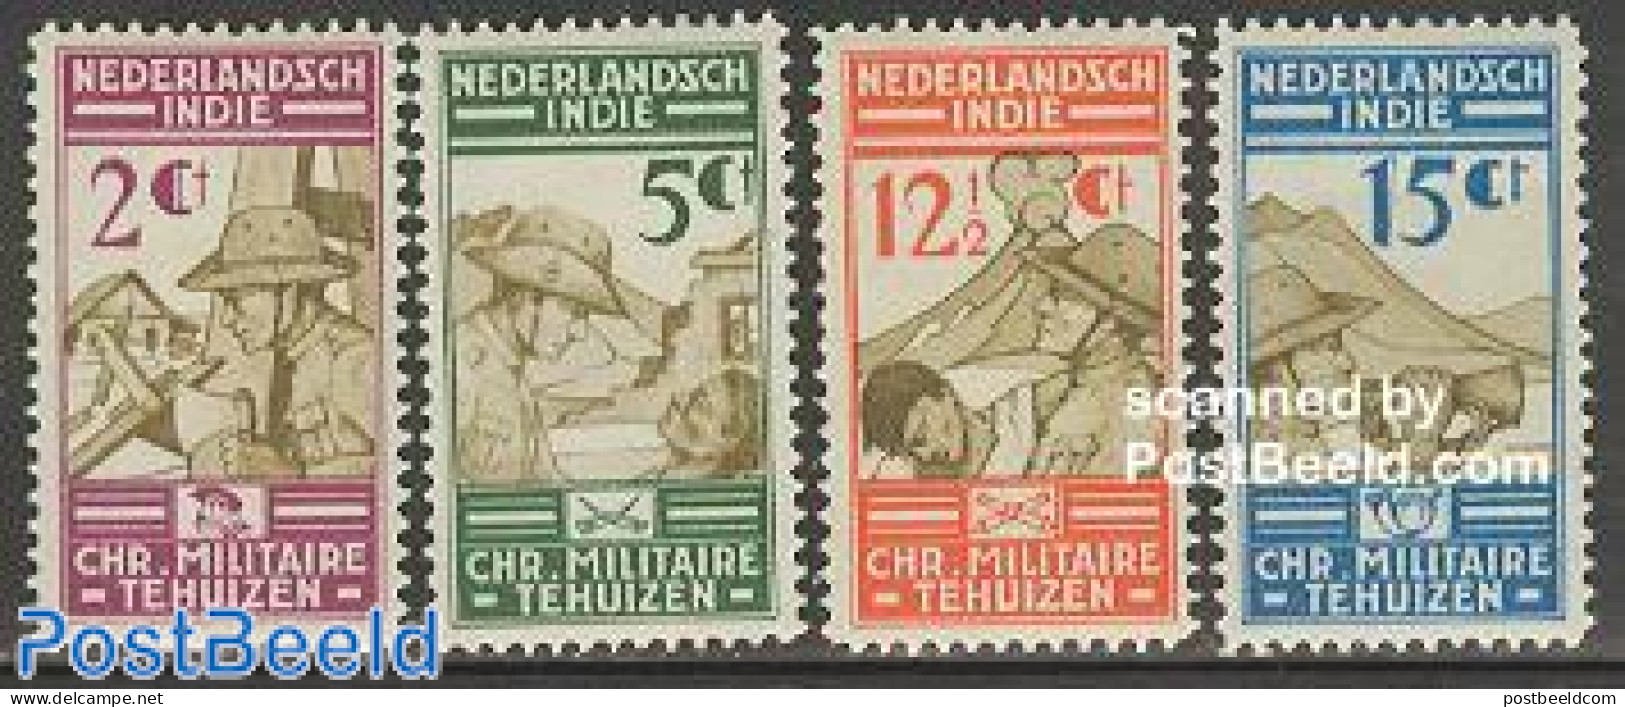 Netherlands Indies 1935 Military Association 4v, Unused (hinged), History - Militarism - Militares